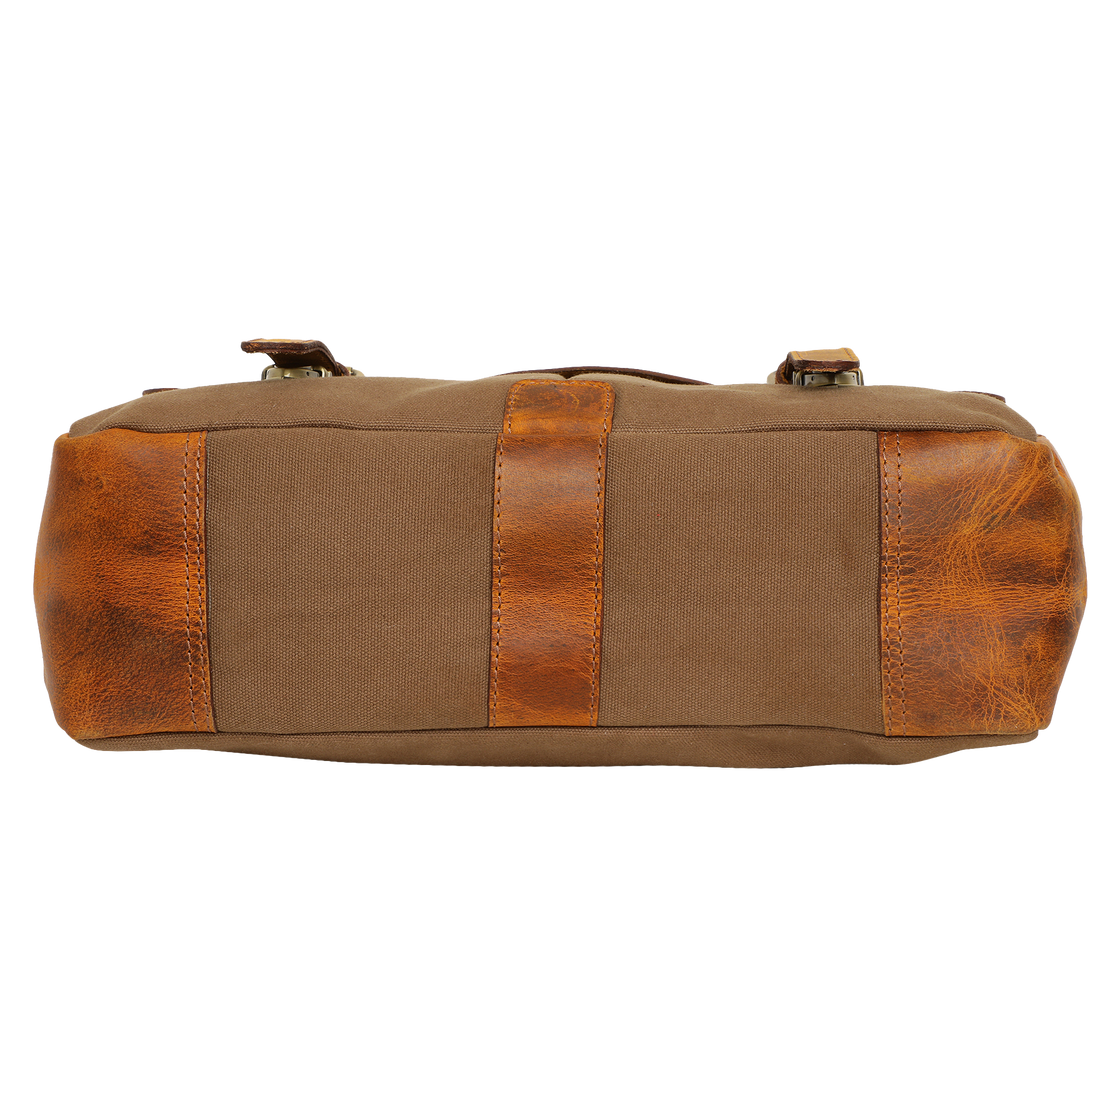 Retro Style Leather Canvas Messenger Bag Briefcase Laptop Bag (Olive Green)